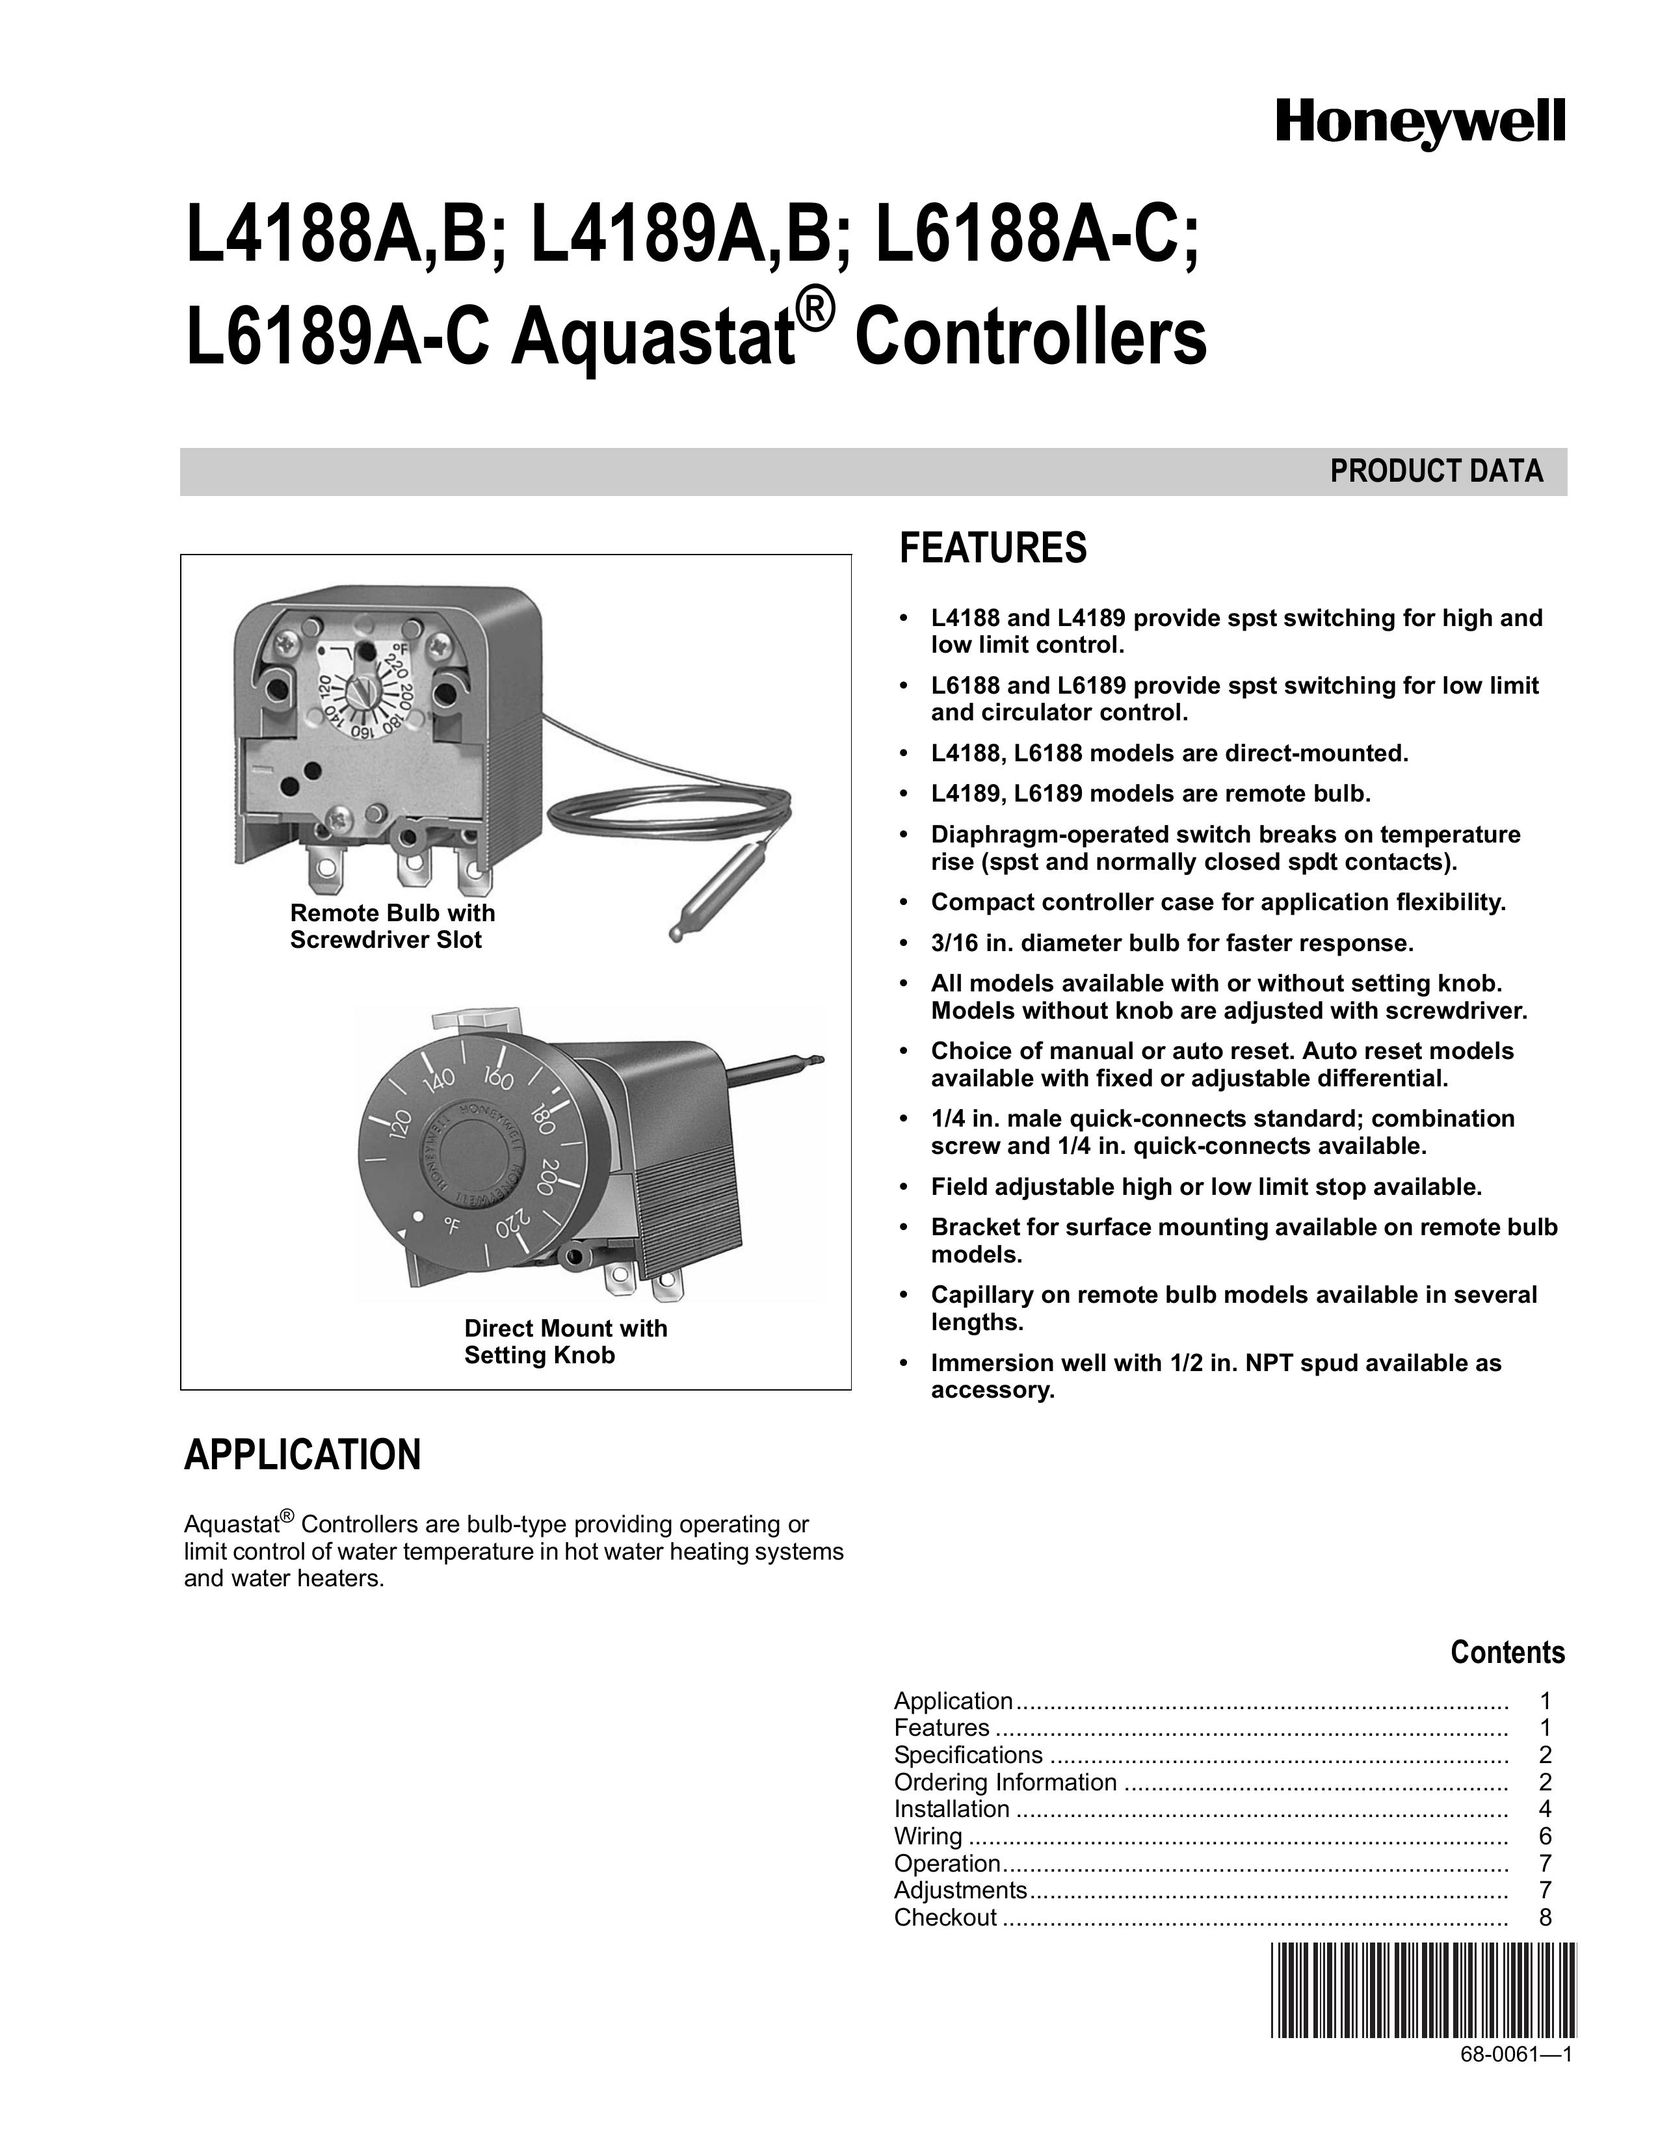 Honeywell L4189A Water Heater User Manual